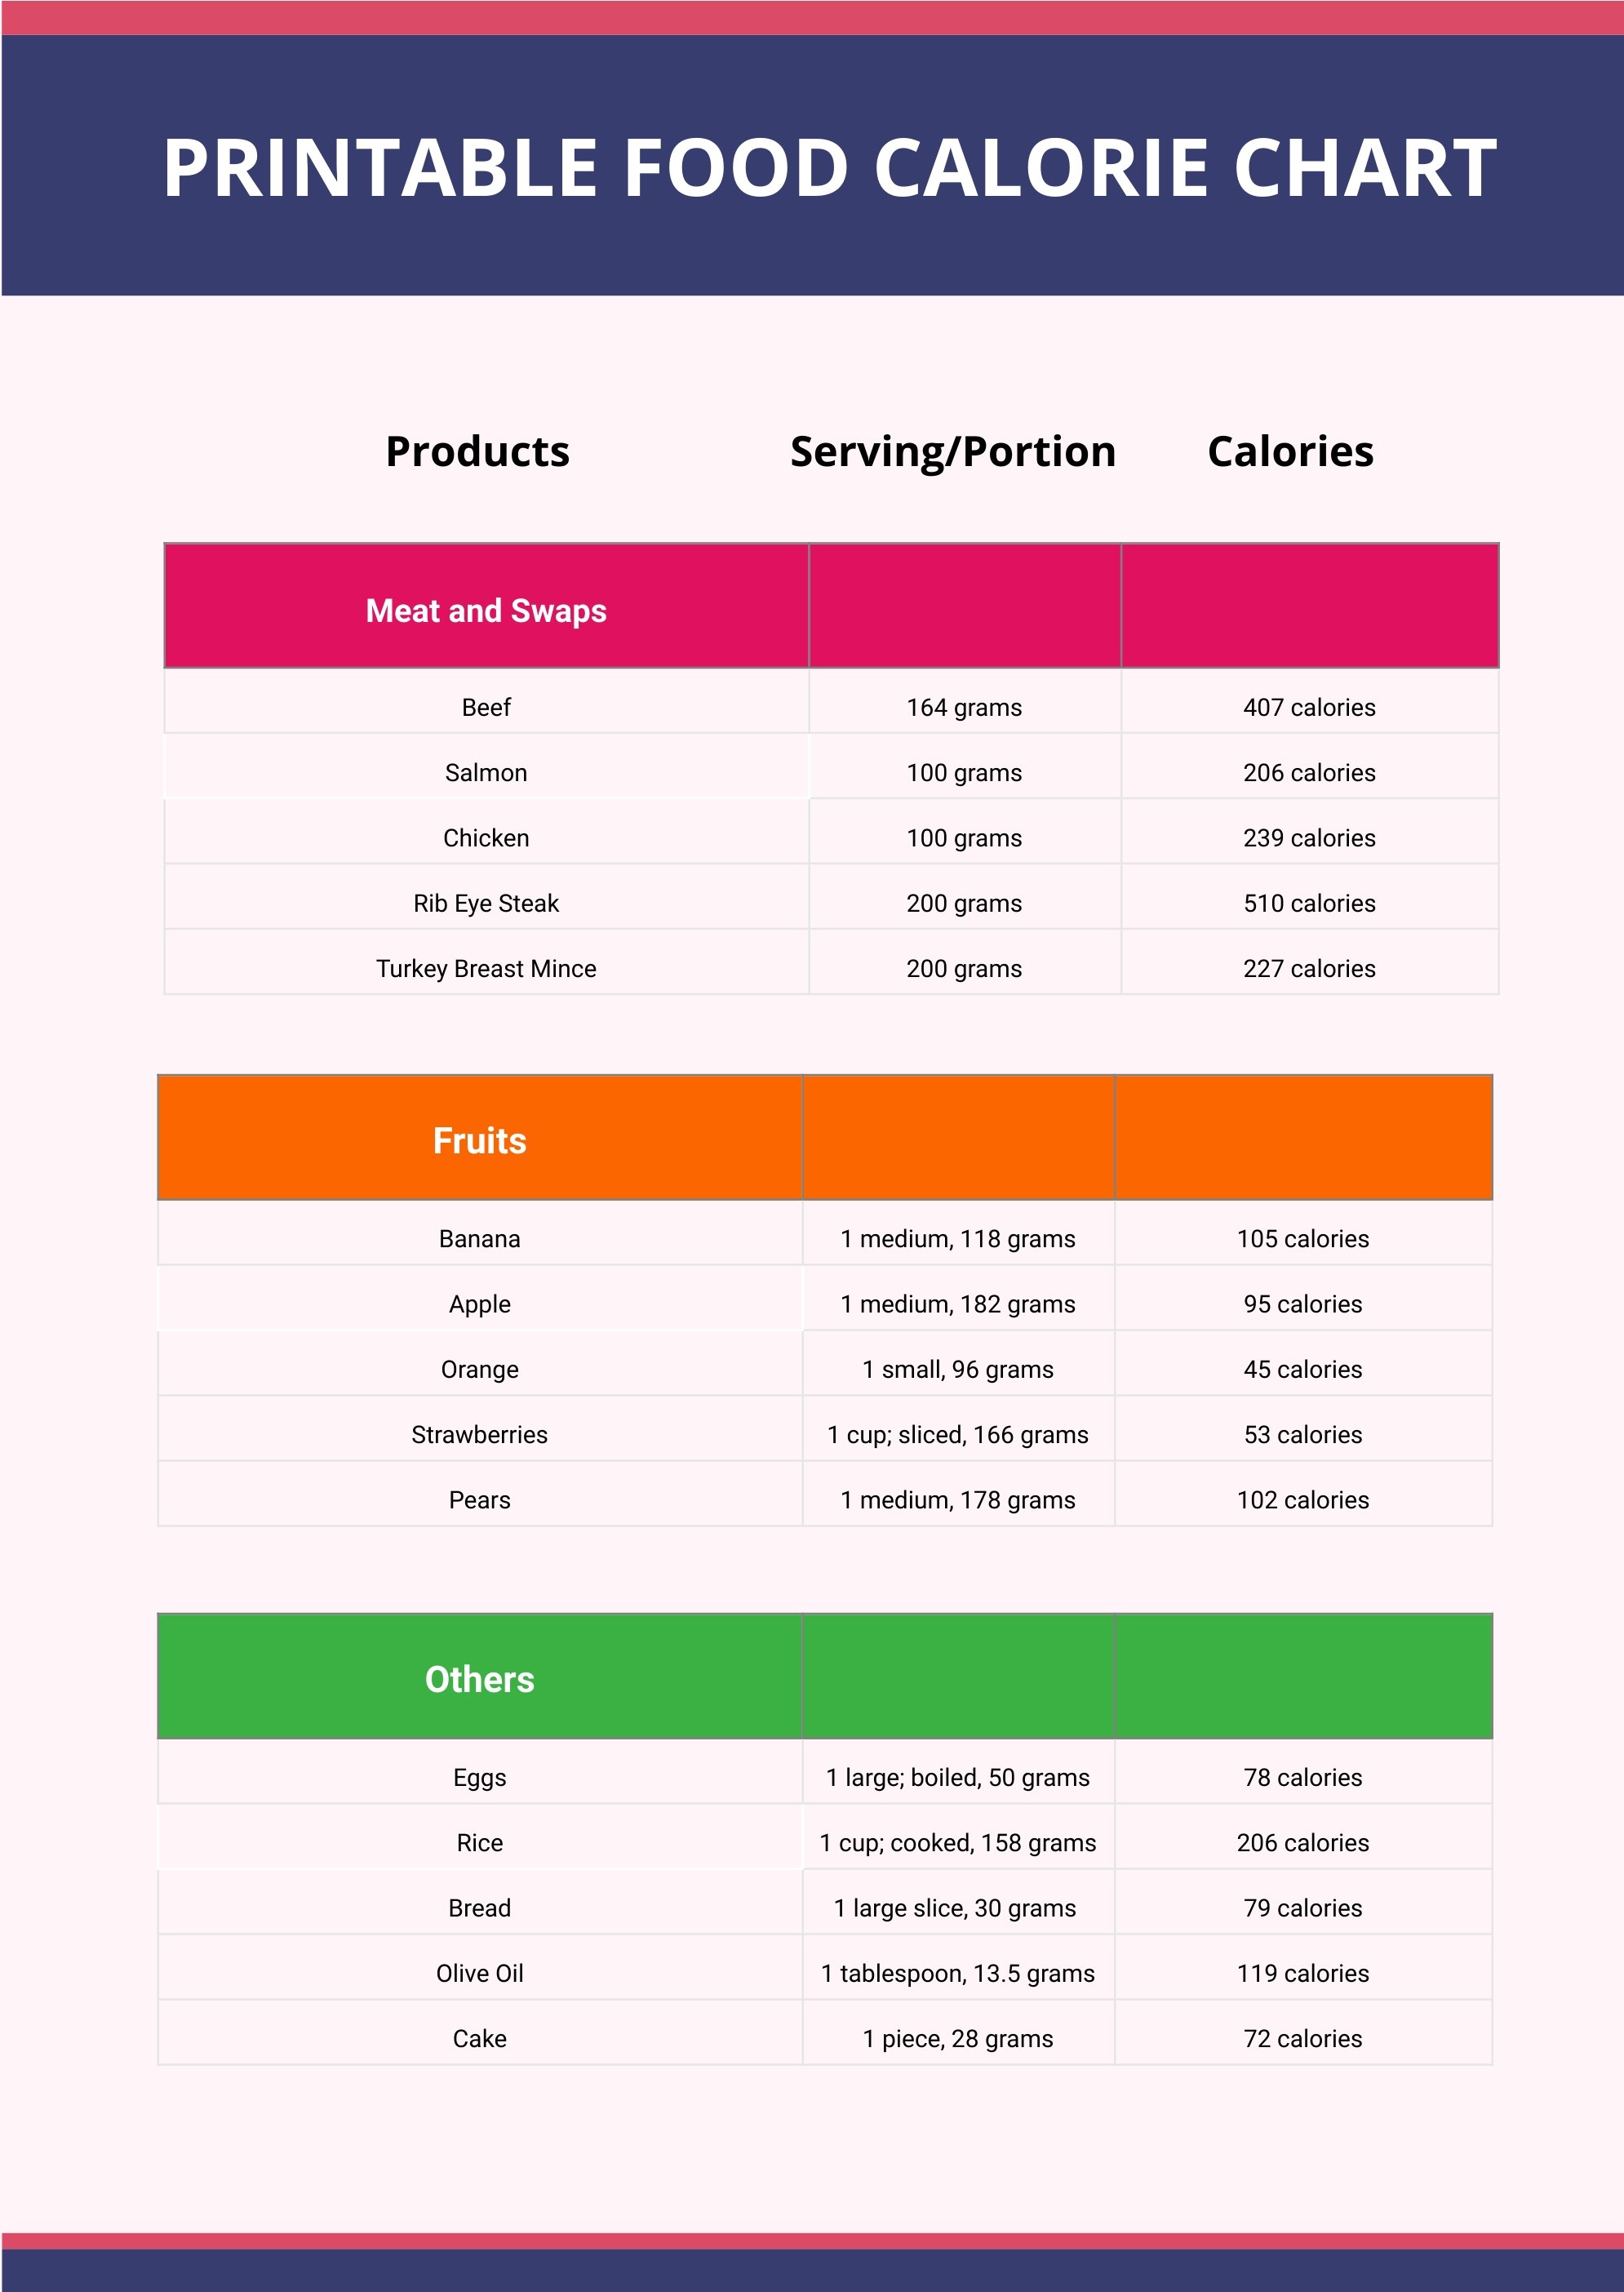 Printable Food Calorie Chart in PDF, Illustrator